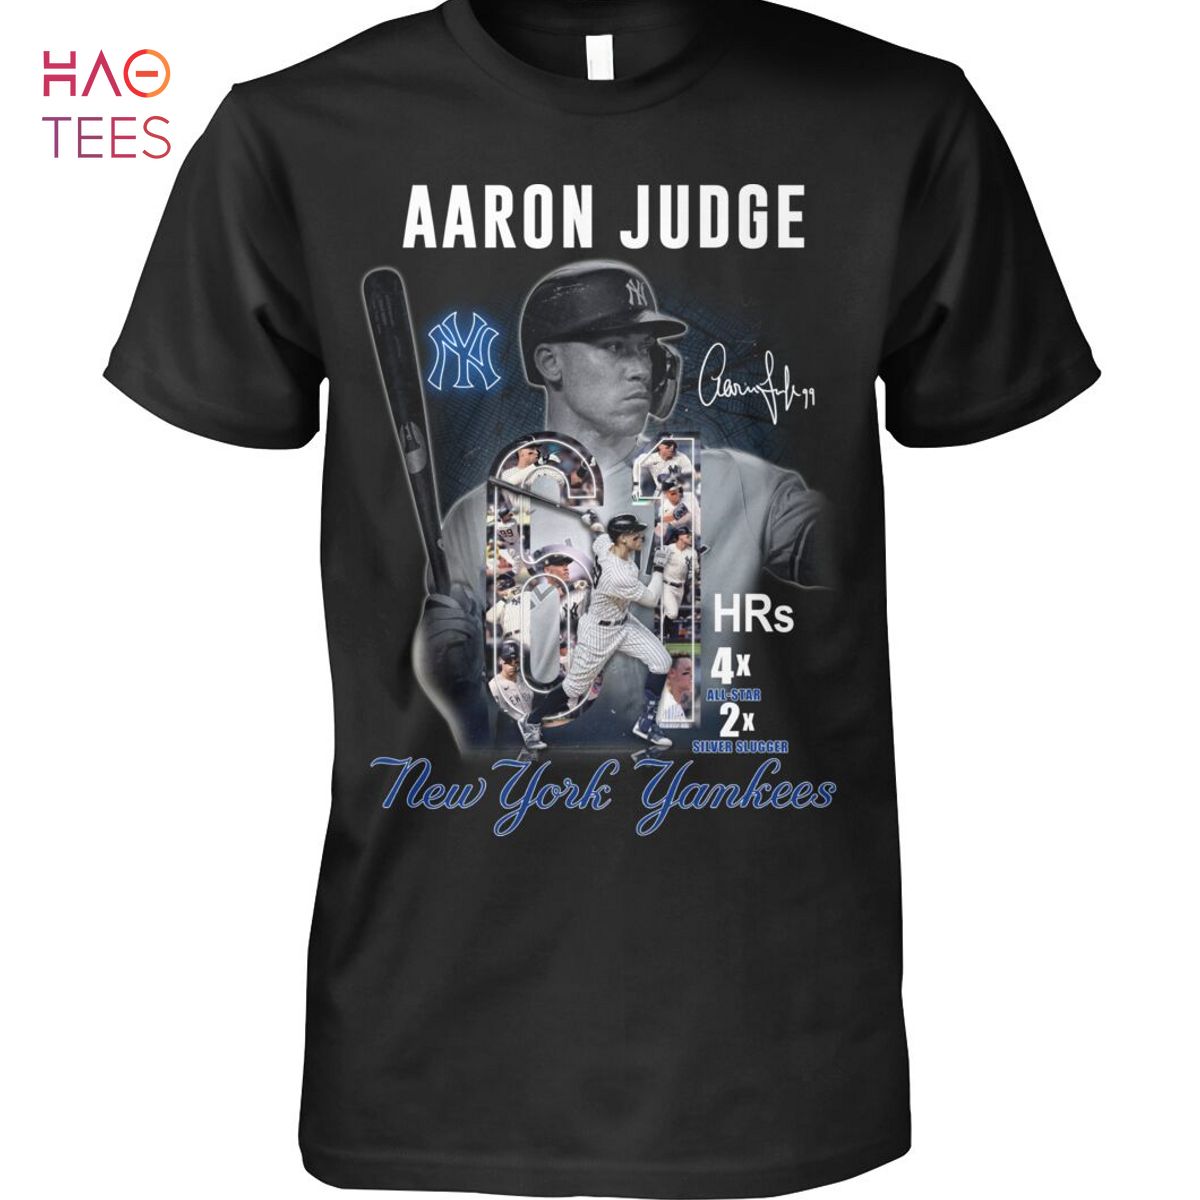 aaron judge yankee shirt